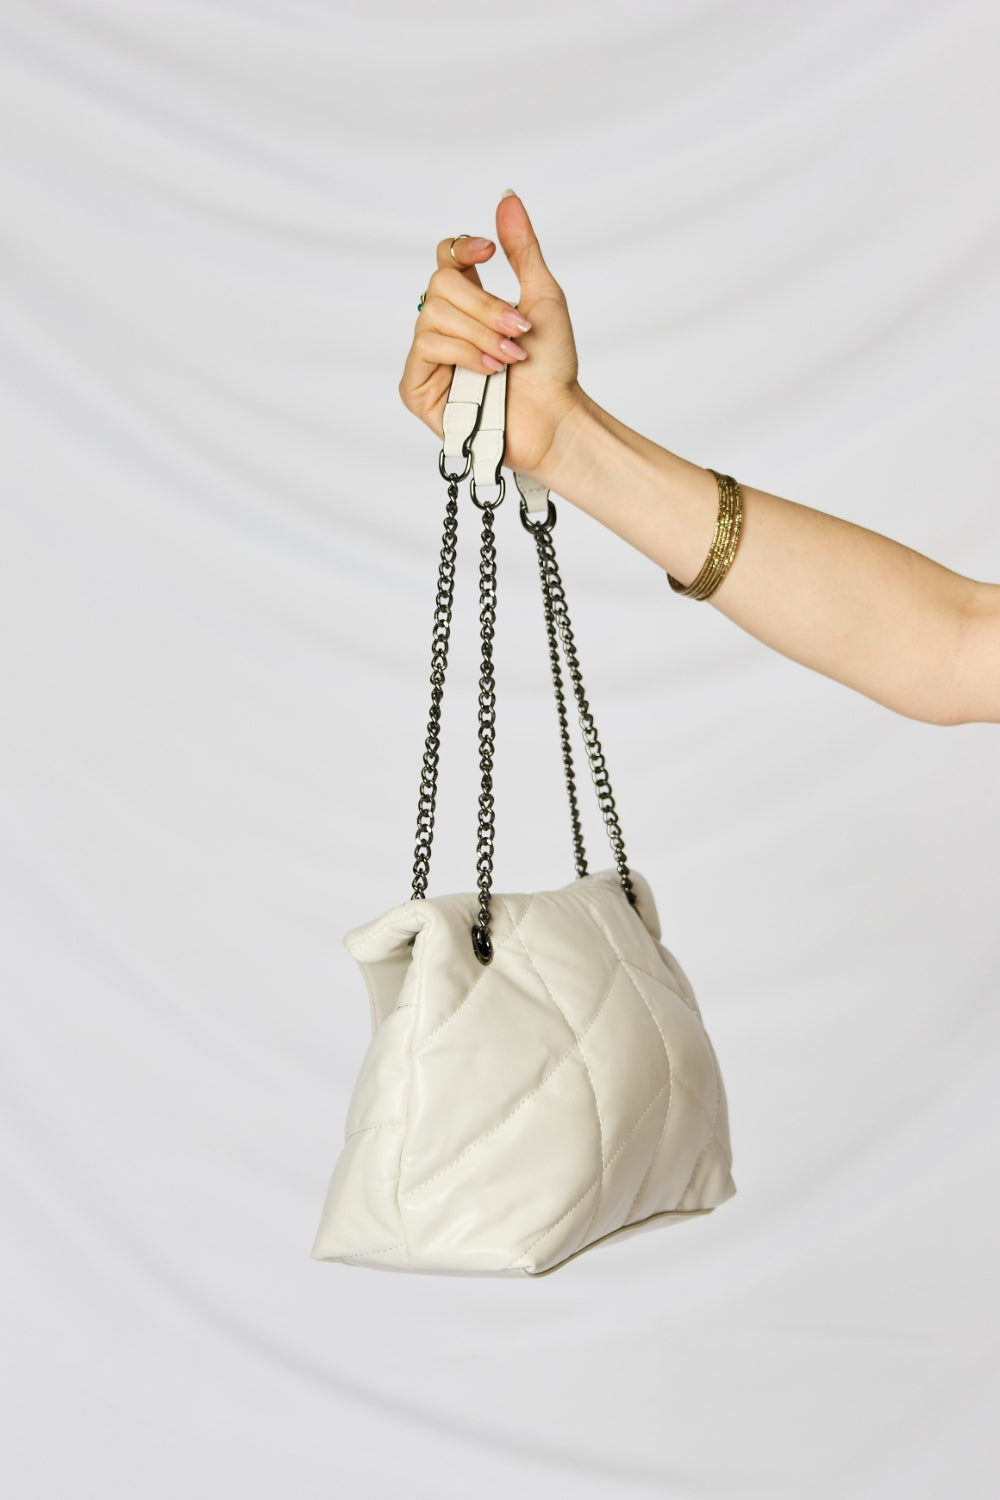 Black PU Leather Chain Handbag (2 Colors)